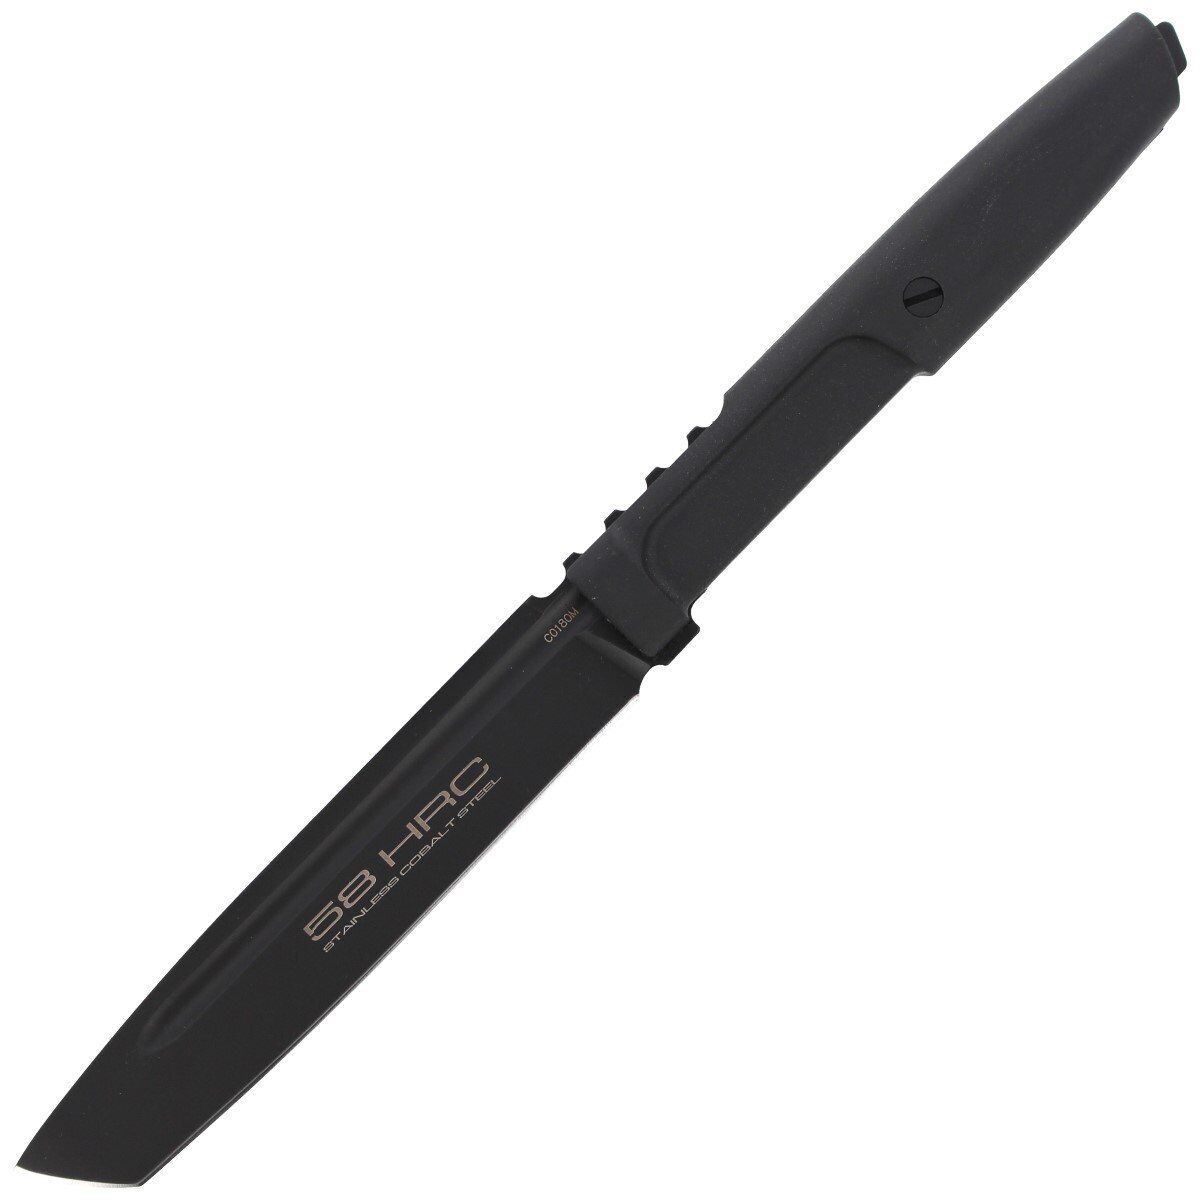 Extrema Ratio Mamba Black Forprene knife, Black N690